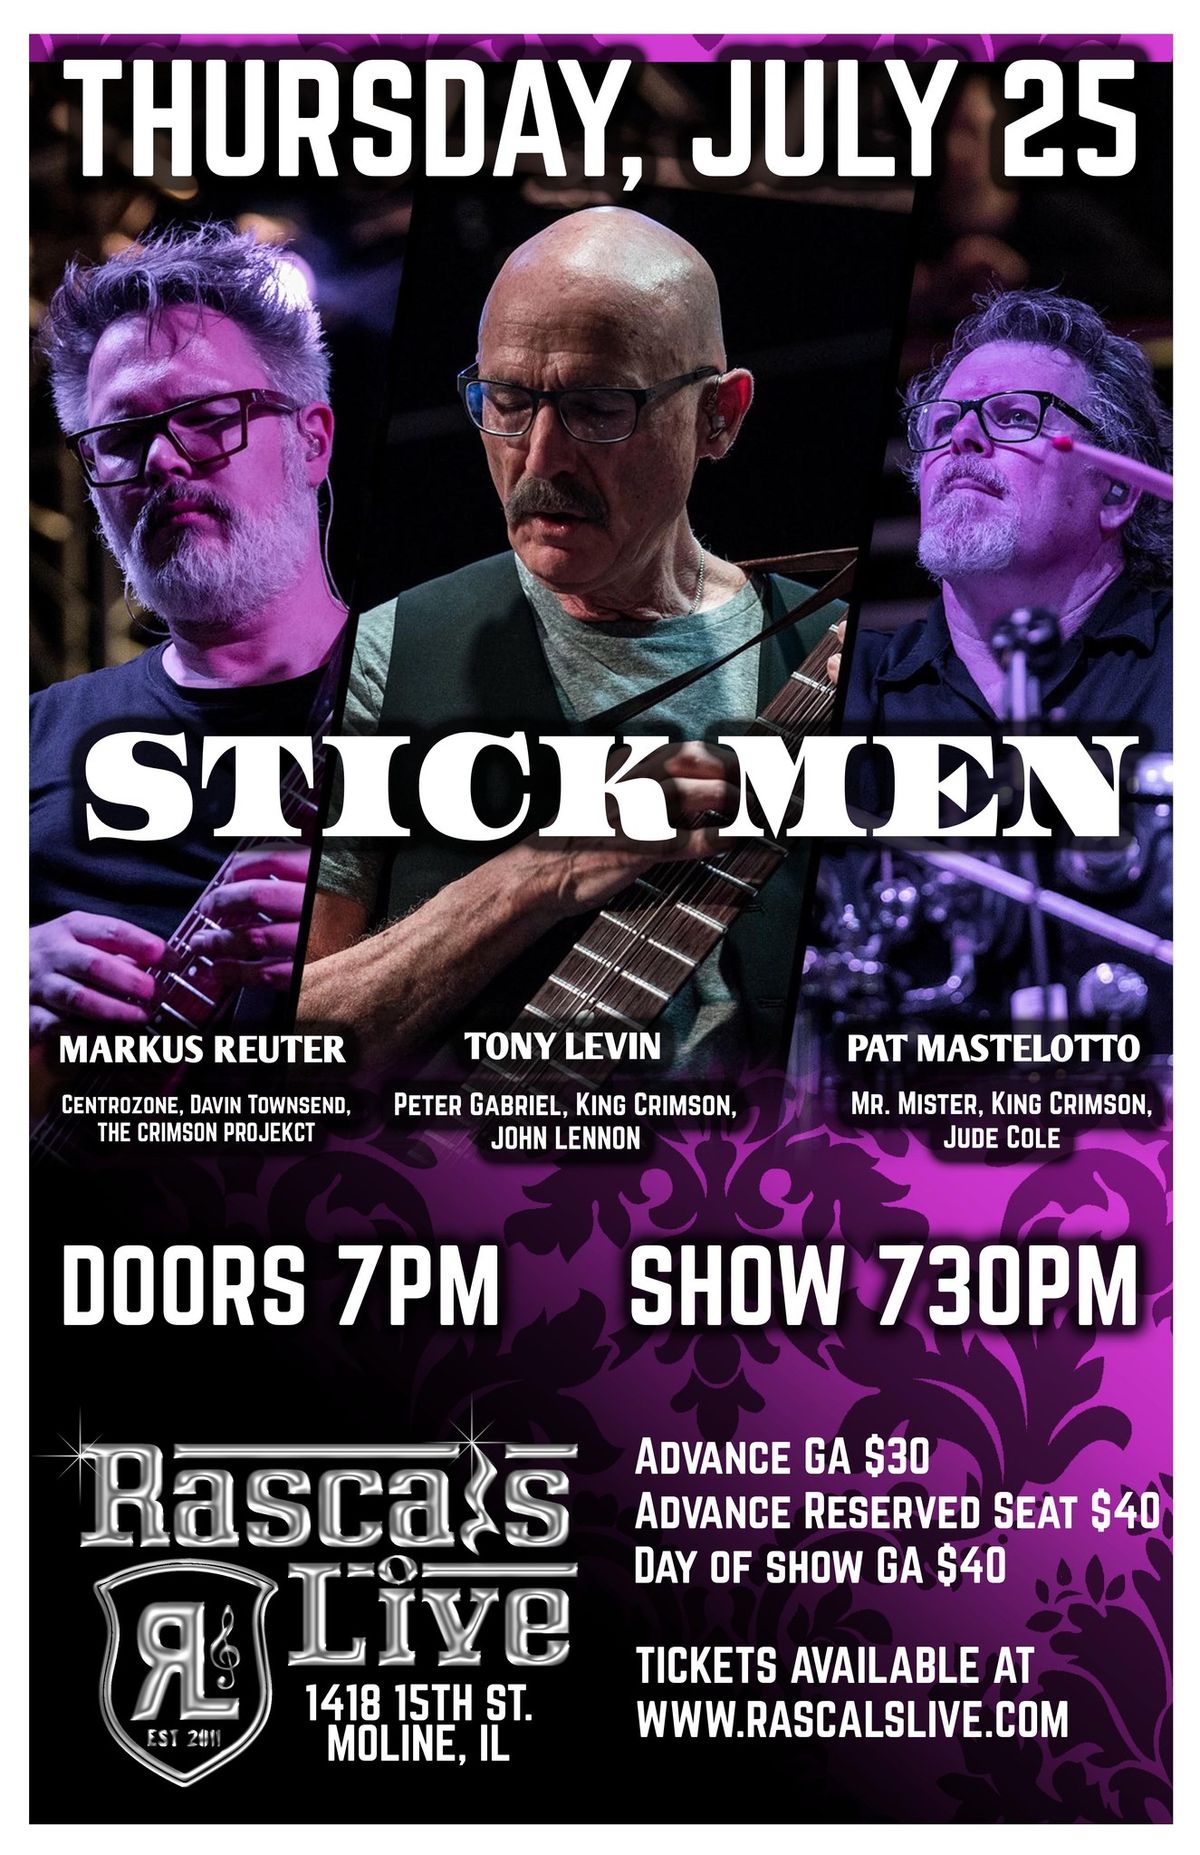 STICK MEN featuring Markus Reuter, Tony Levin & Pat Mastelotto